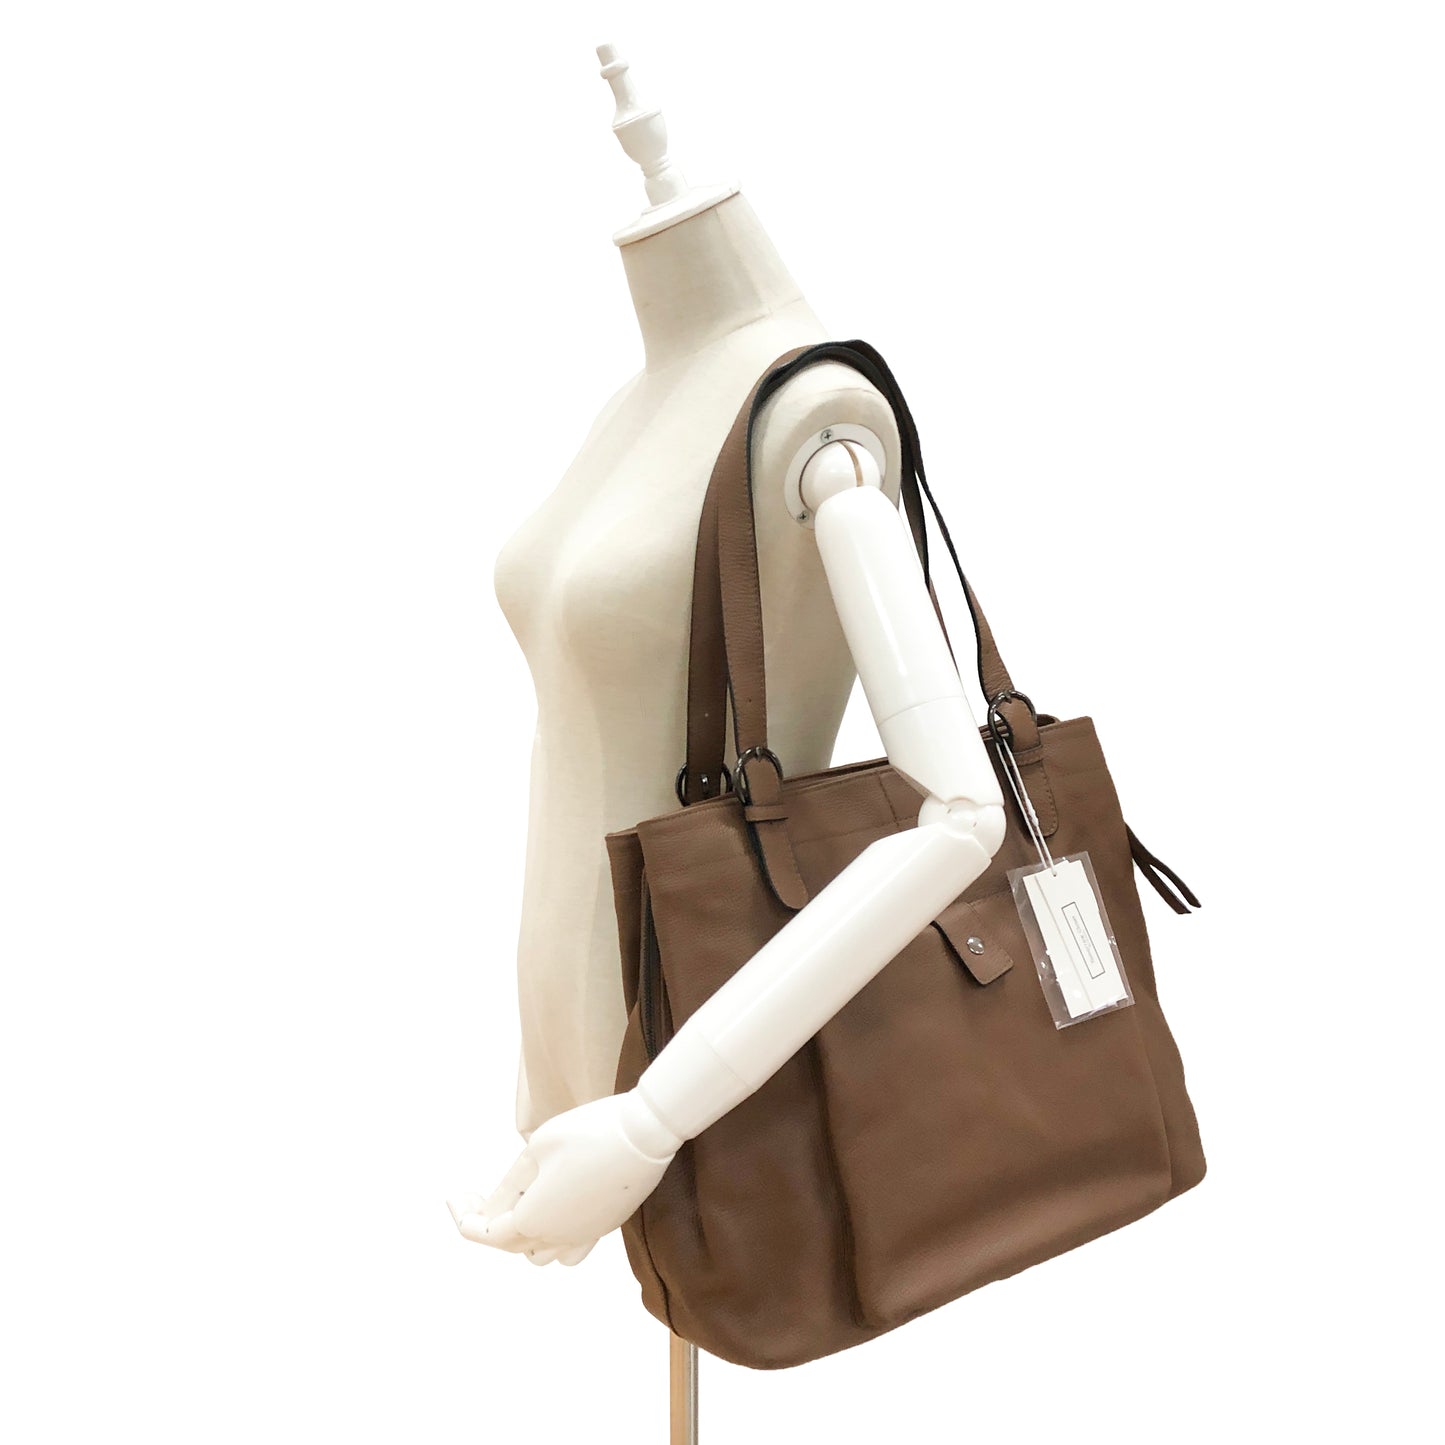 Women's genuine cowhide leather handbag Cara design by Tomorrow Closet